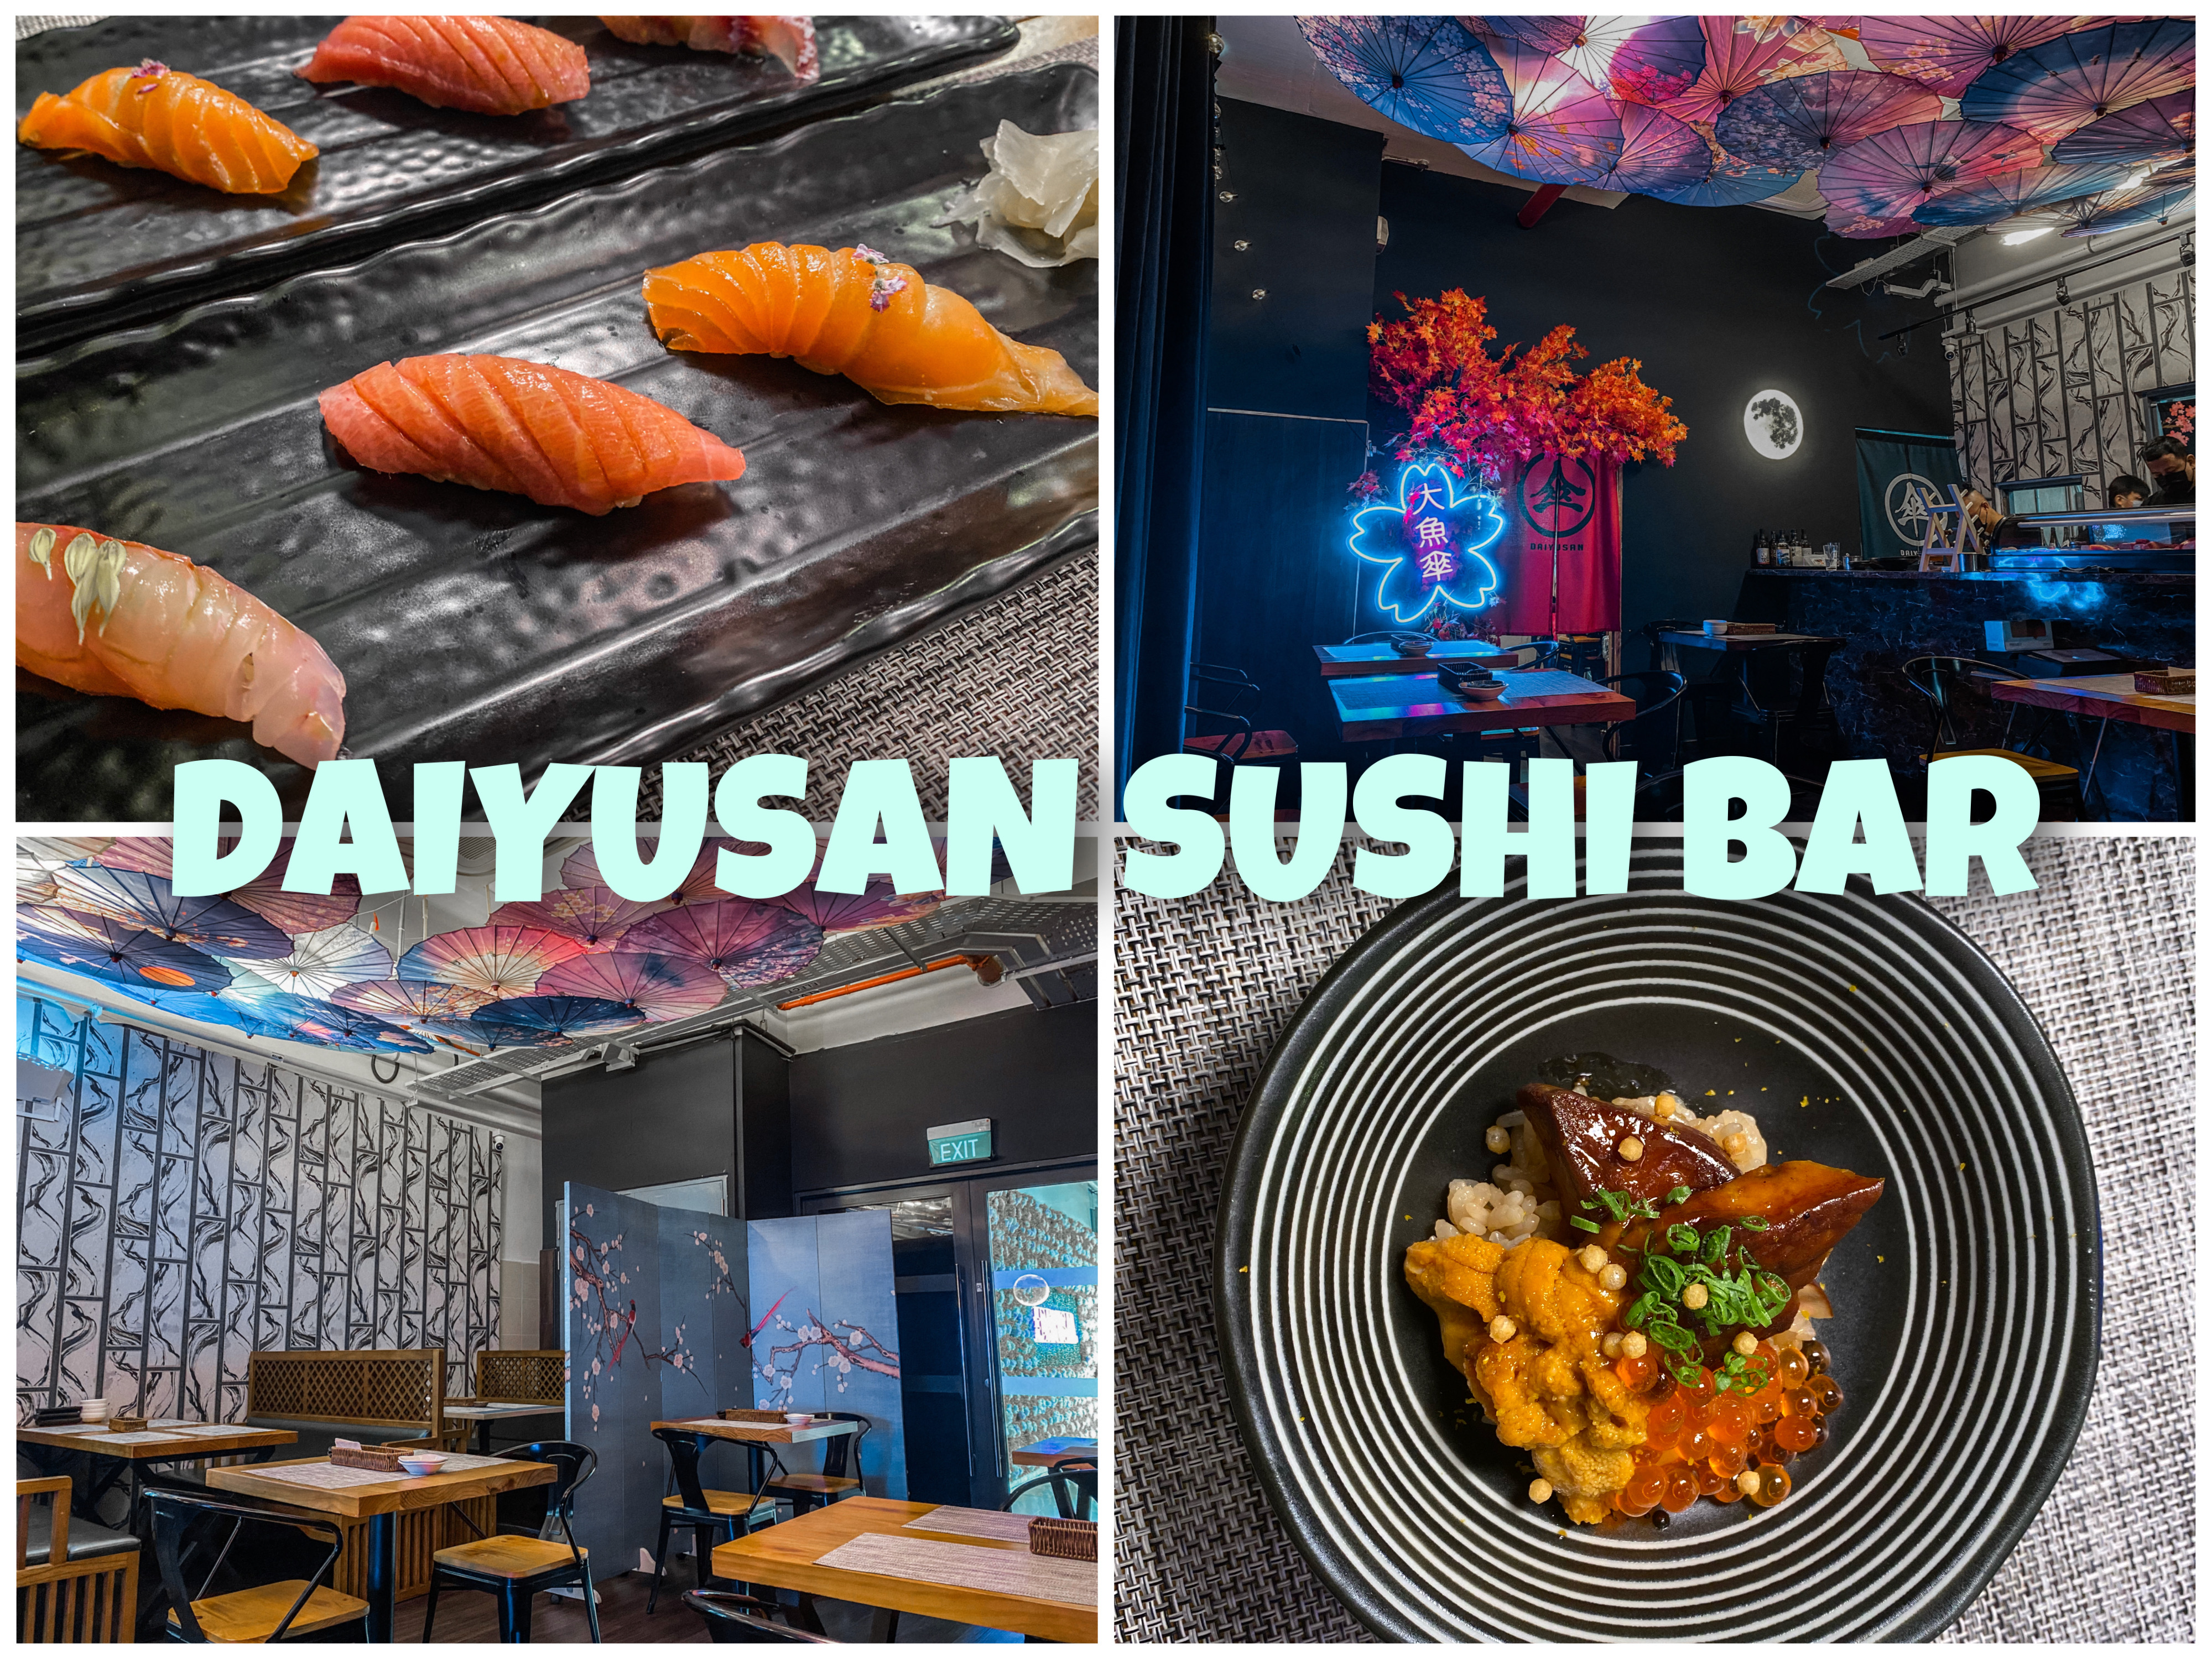 Daiyusan Sushi Bar @ Tai Seng: Affordable Omakase Review - Faithfullyours